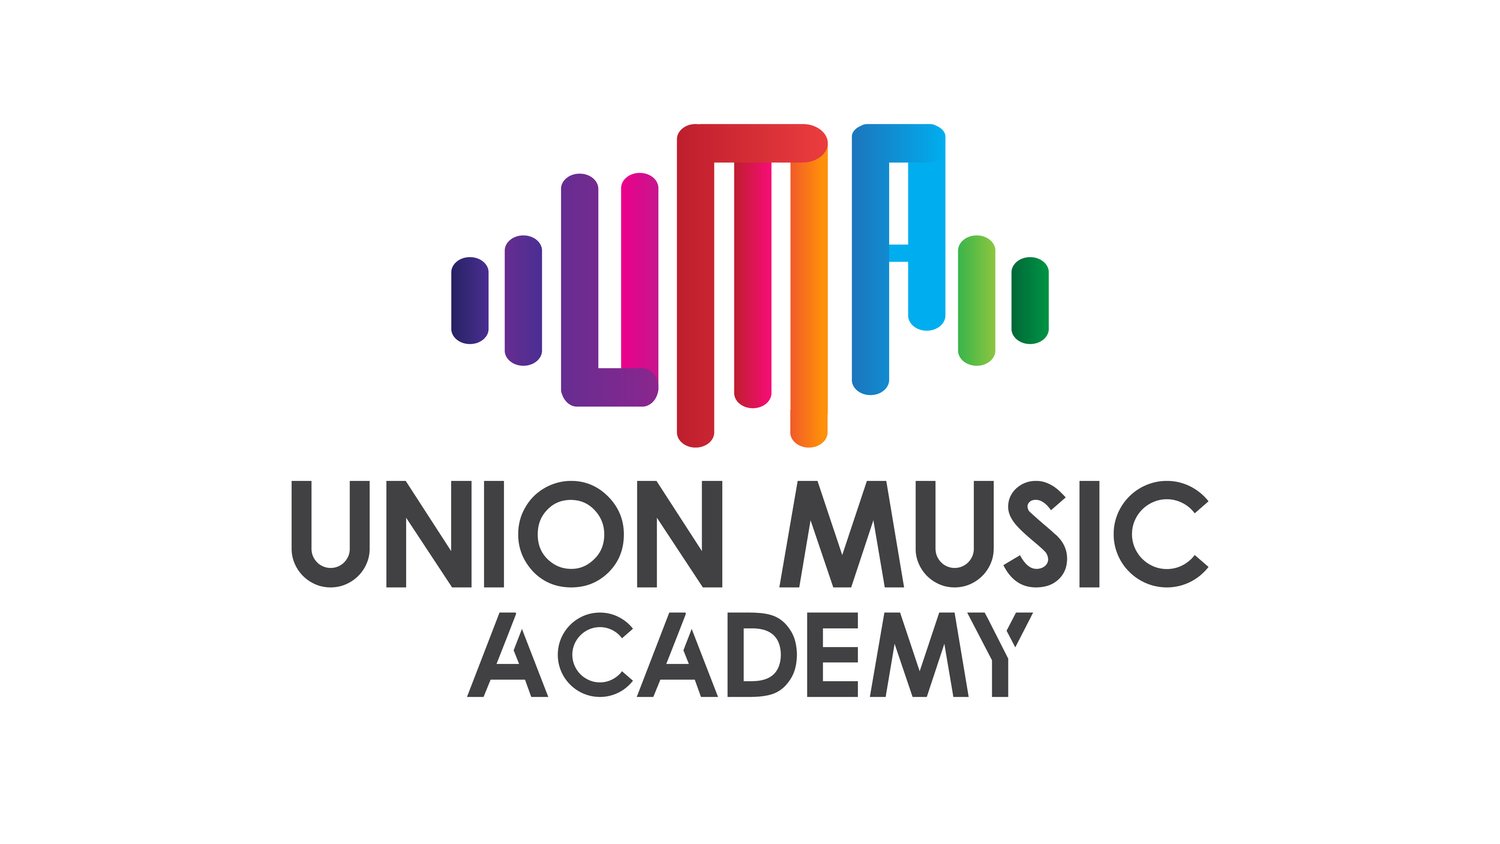 Union Music Academy